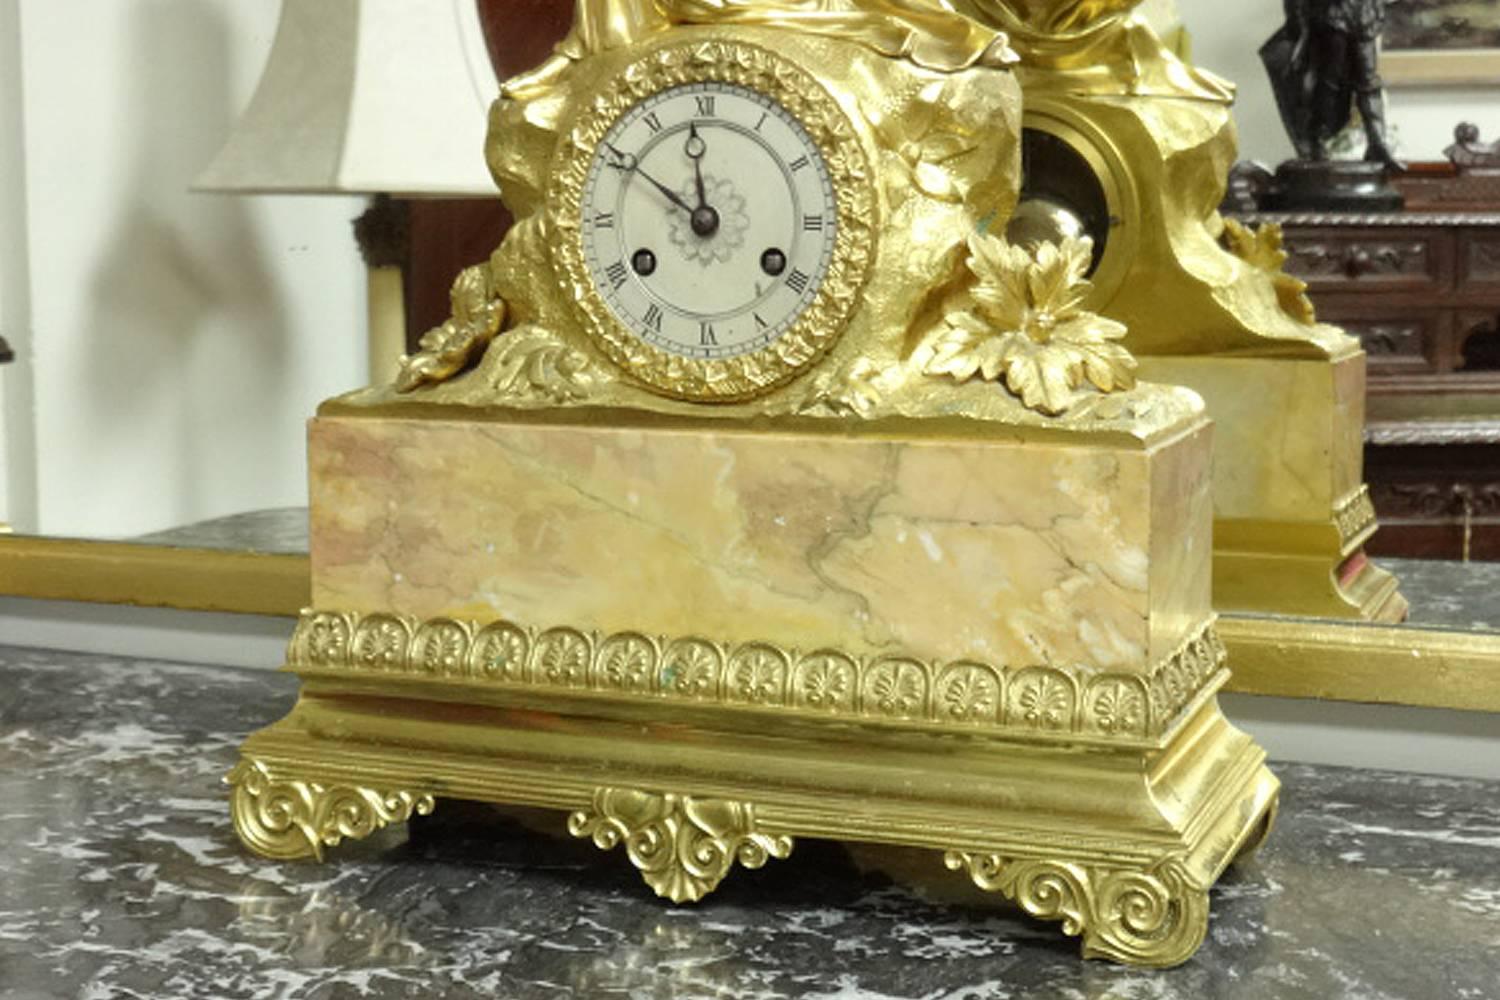 Stunning Gilt Bronze Mantle Clock by 'Gillion' For Sale 1